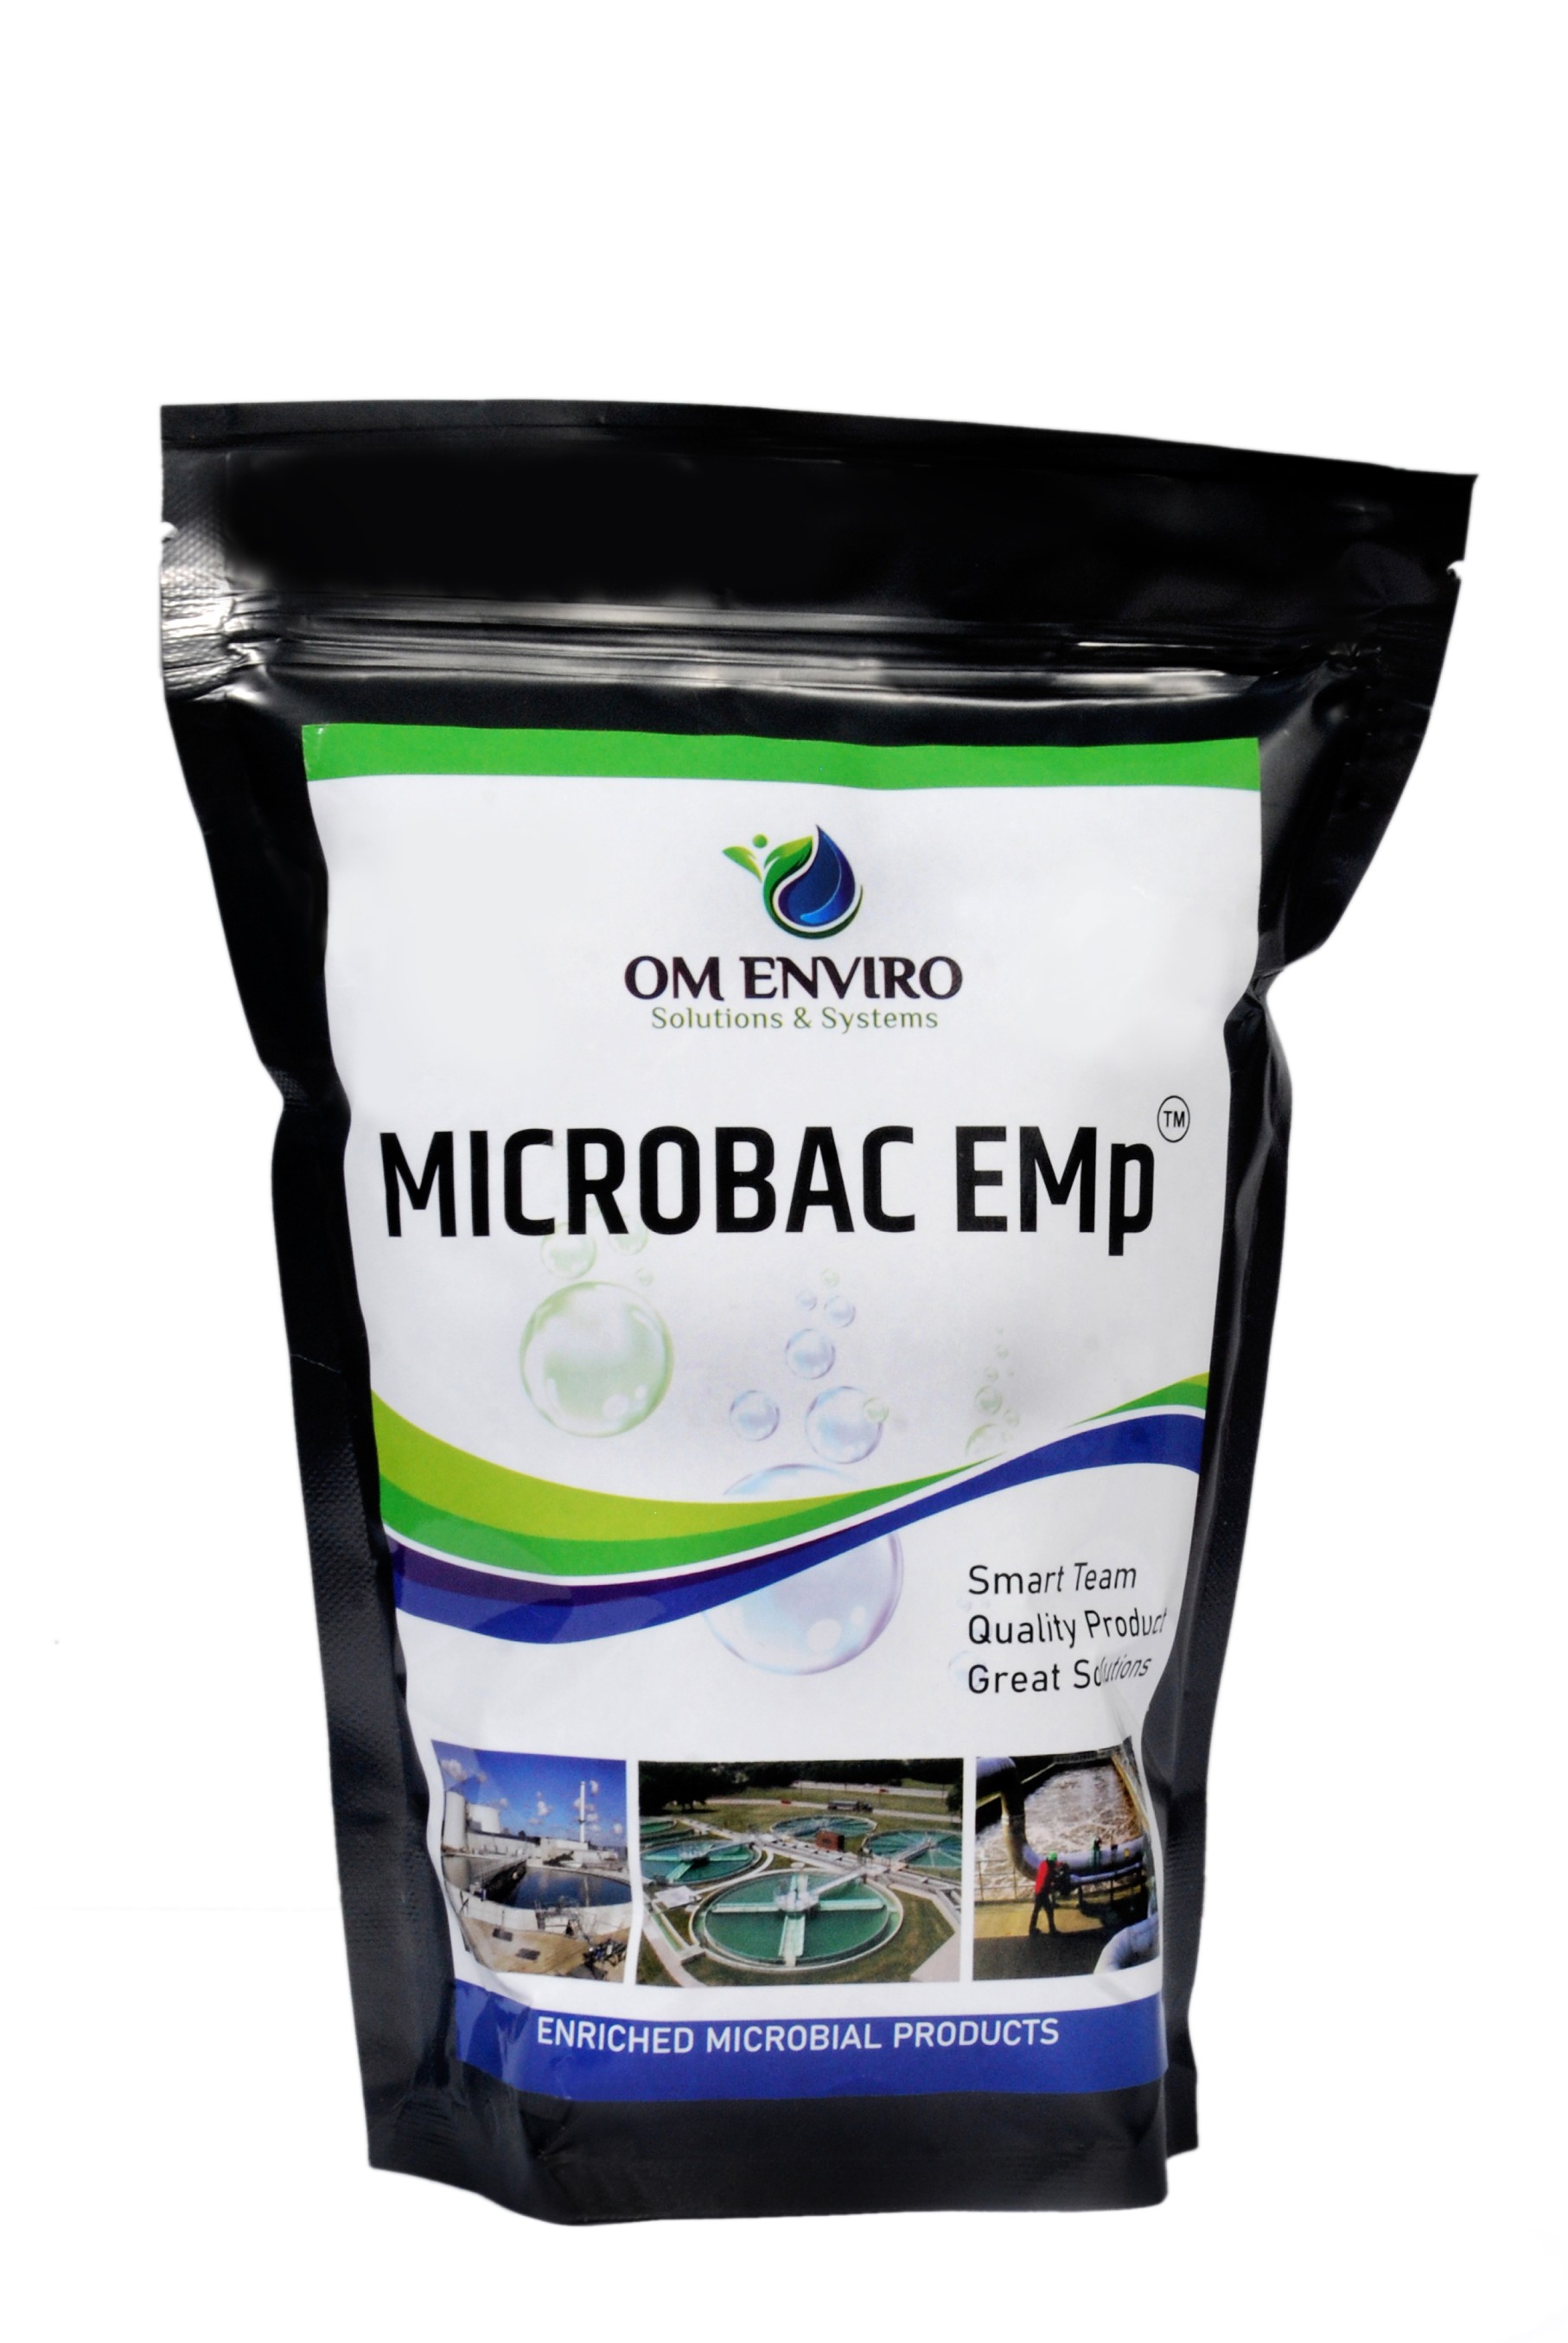 microbac-emp-microbac-sew-bio-culture-for-sewage-treatment